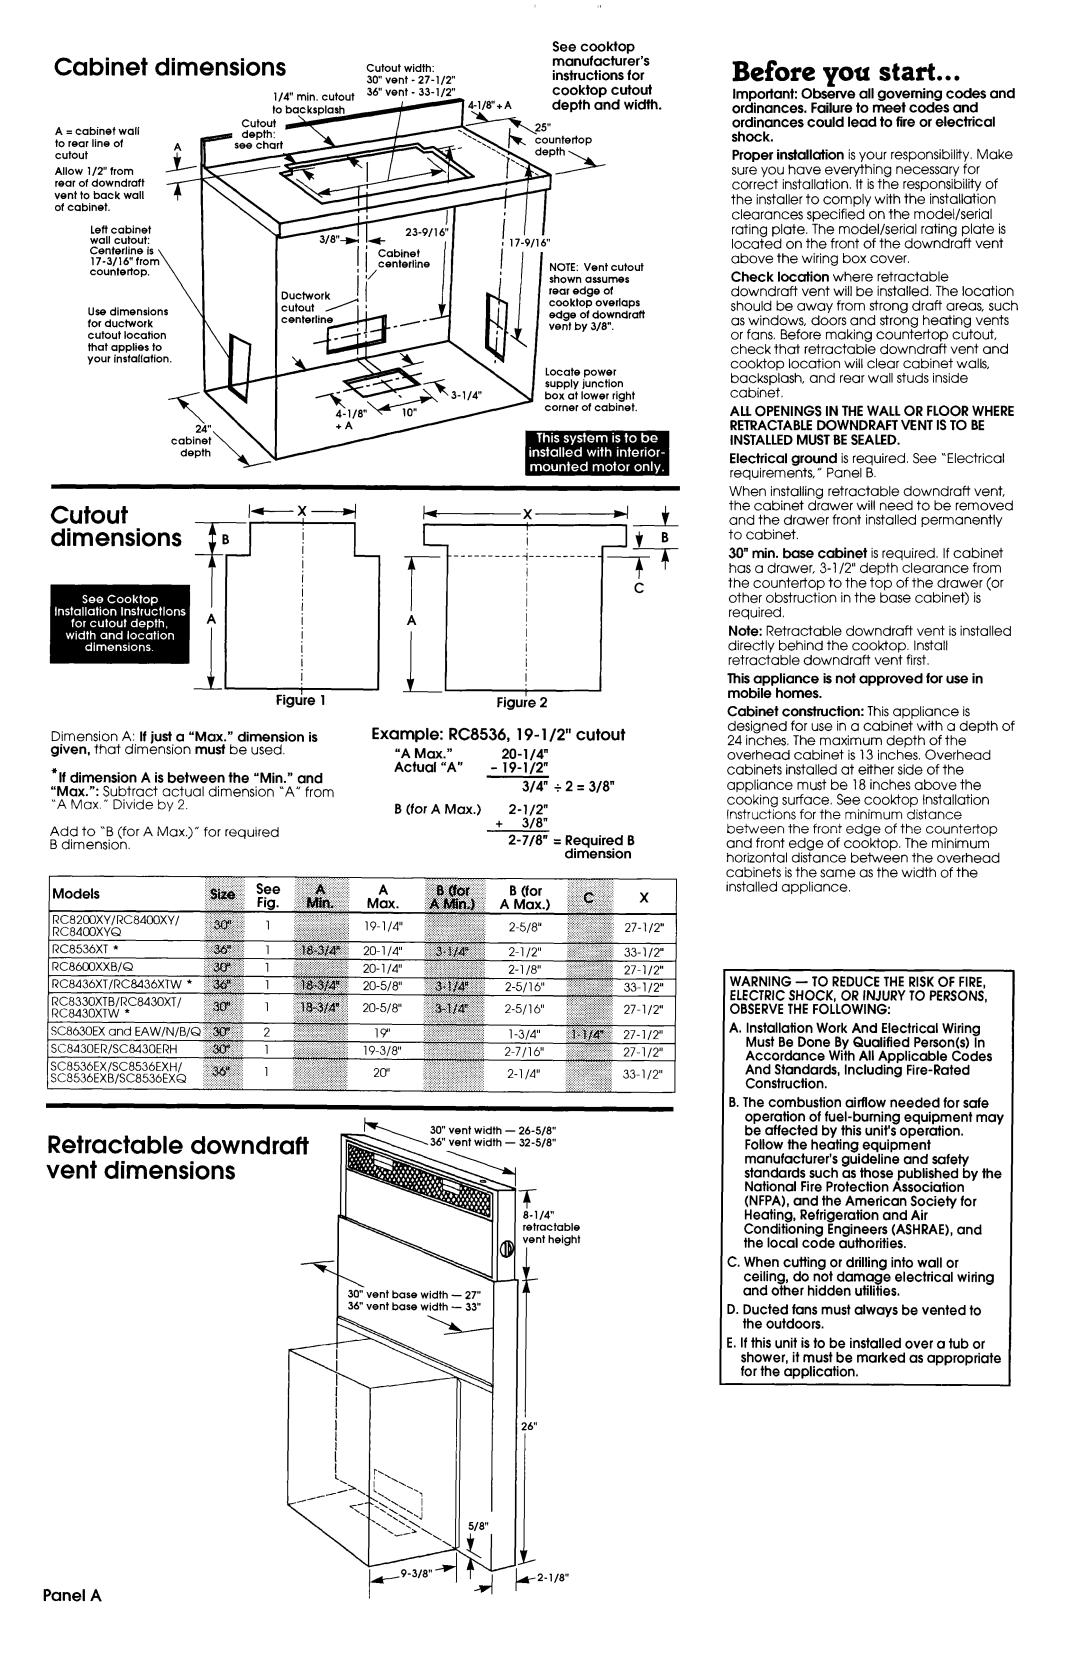 Whirlpool 4.32E+13 Before you start, Cabinet di, dimensions JFj, Example RC8536, 19- l/2” cutout, Panel A, Jt -i+, x---d 